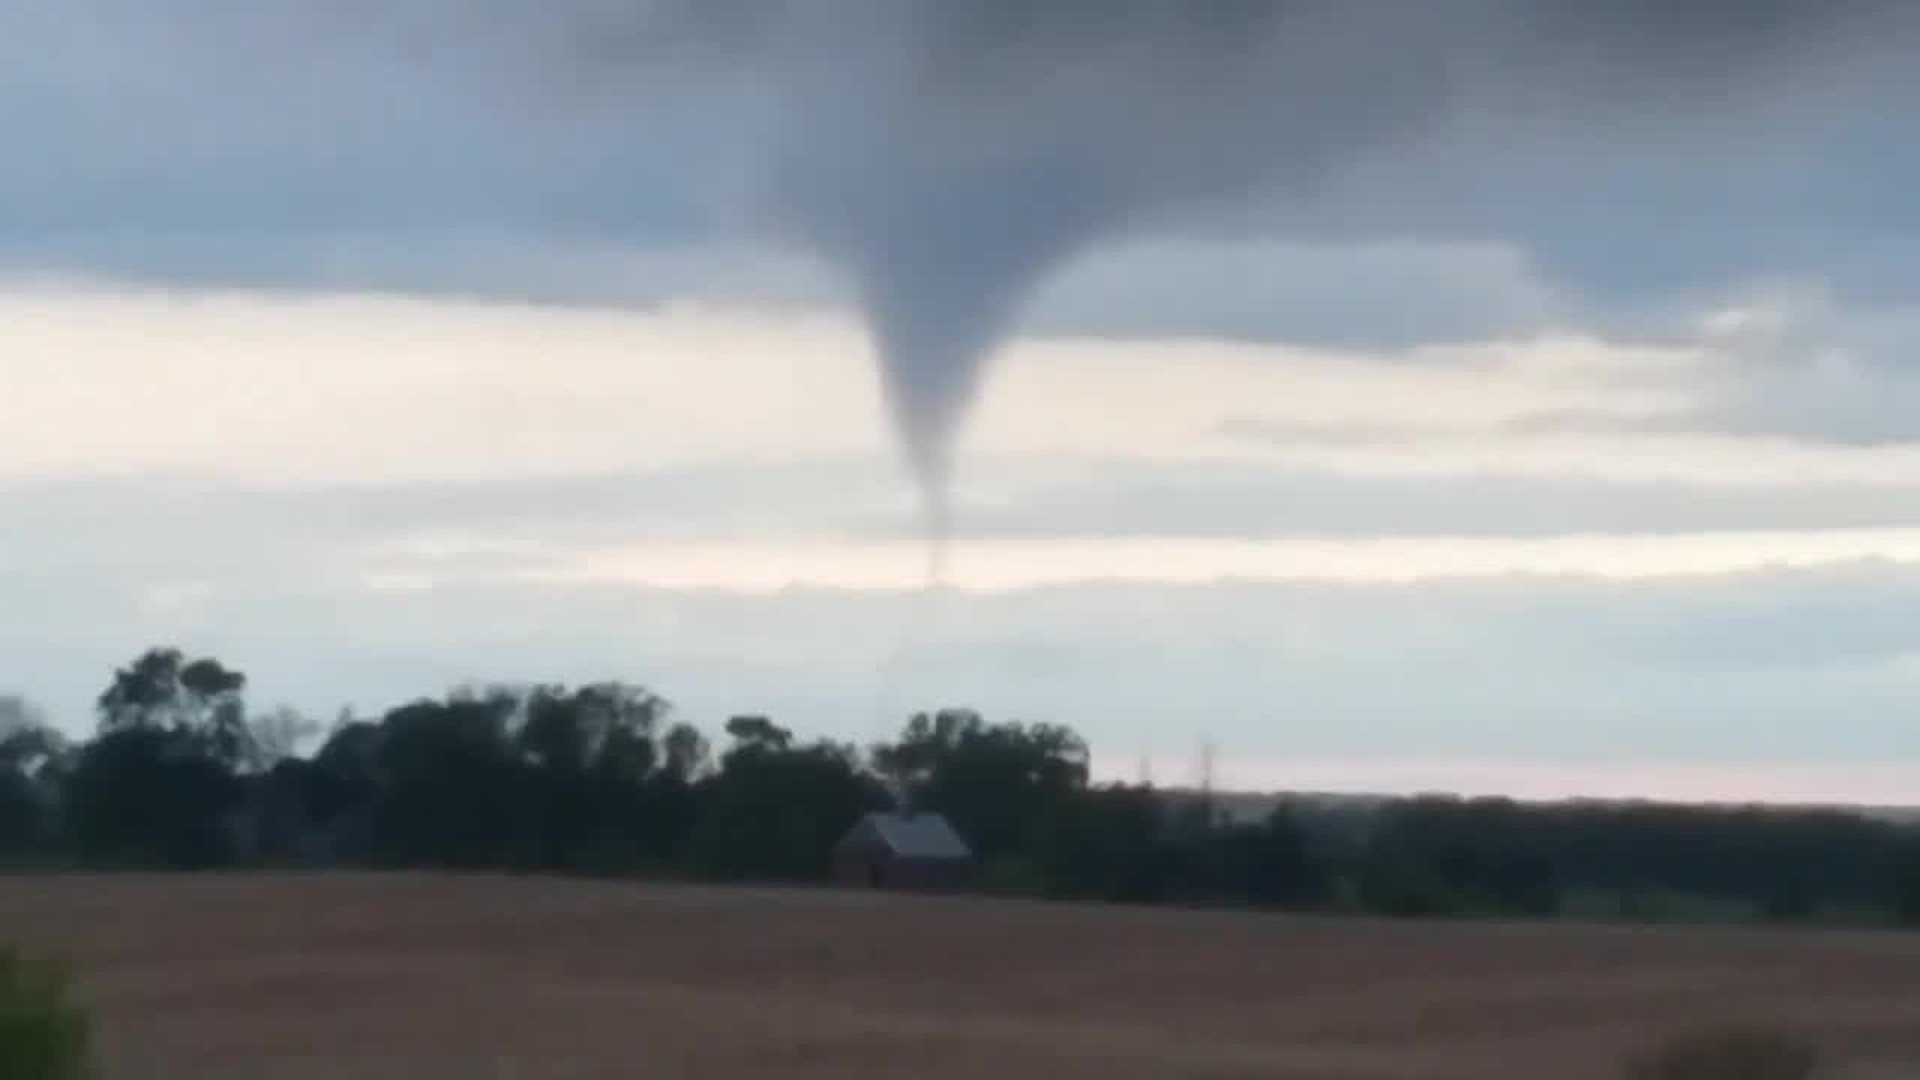 Confirmed tornado in Eldora, IA